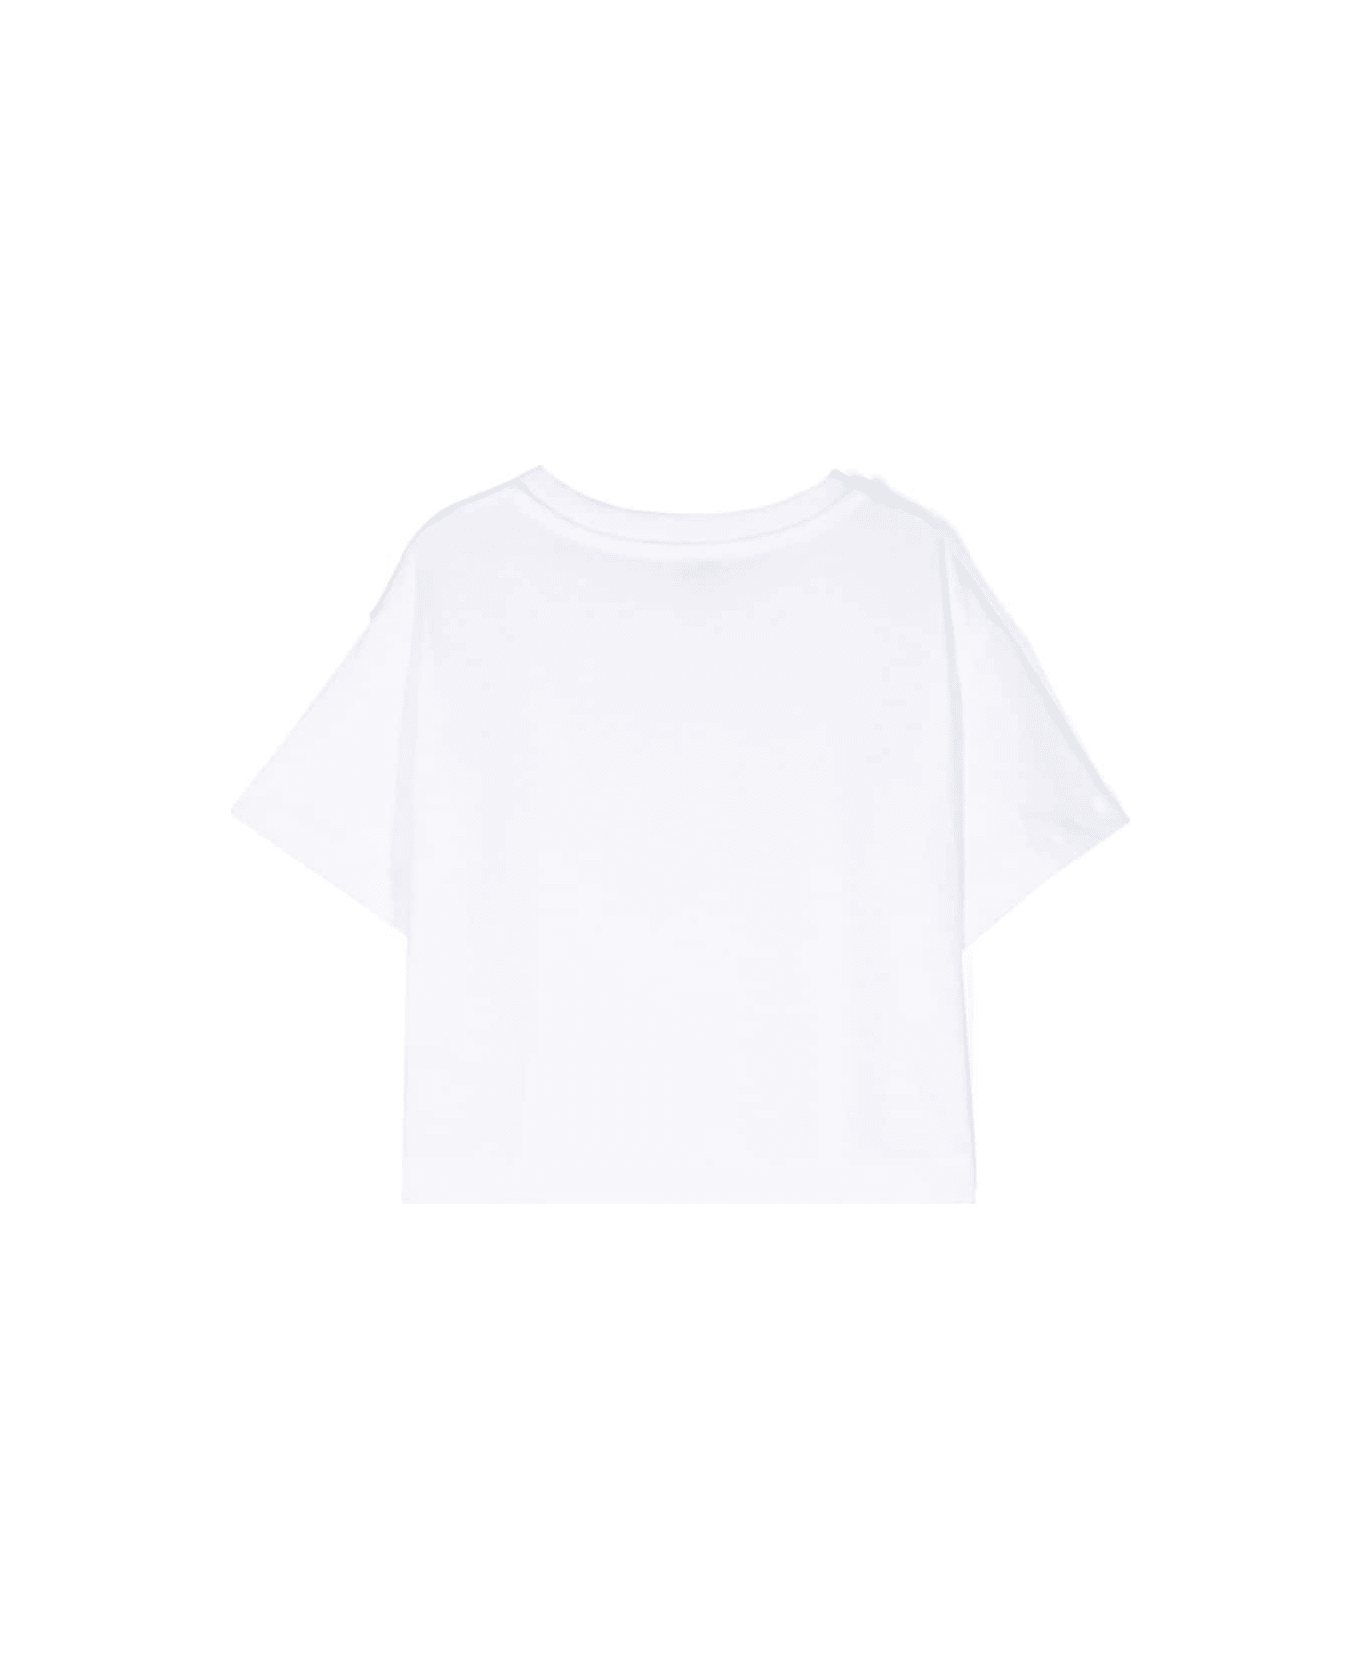 Chiara Ferragni White T-shirt With Winged Heart In Cotton Girl - White